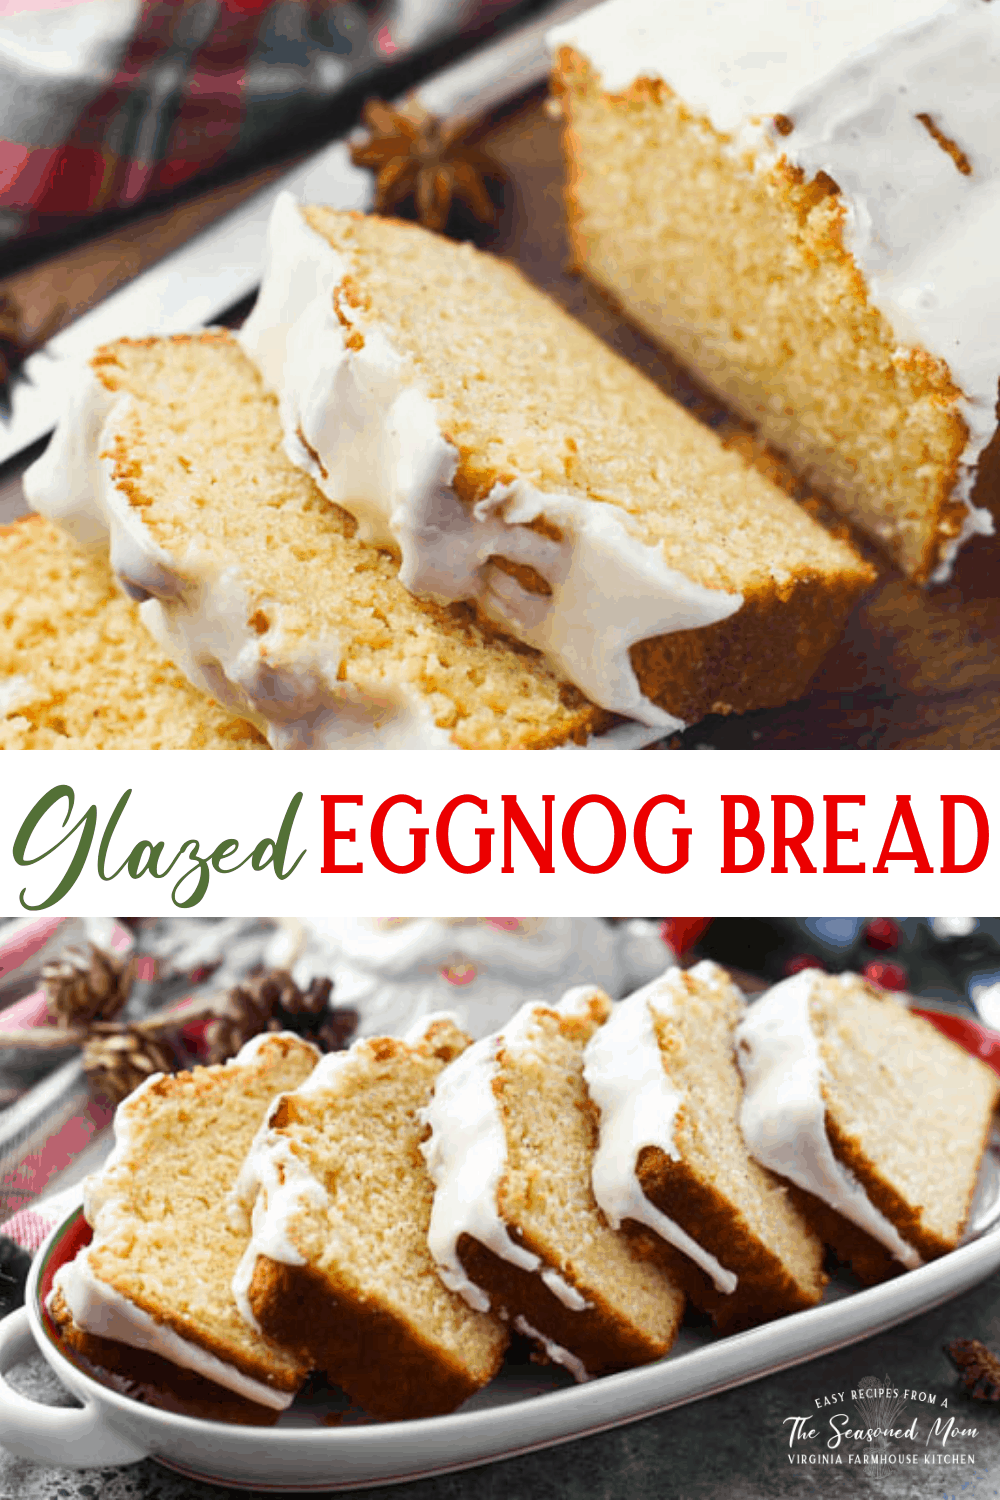 Glazed Eggnog Bread - The Seasoned Mom